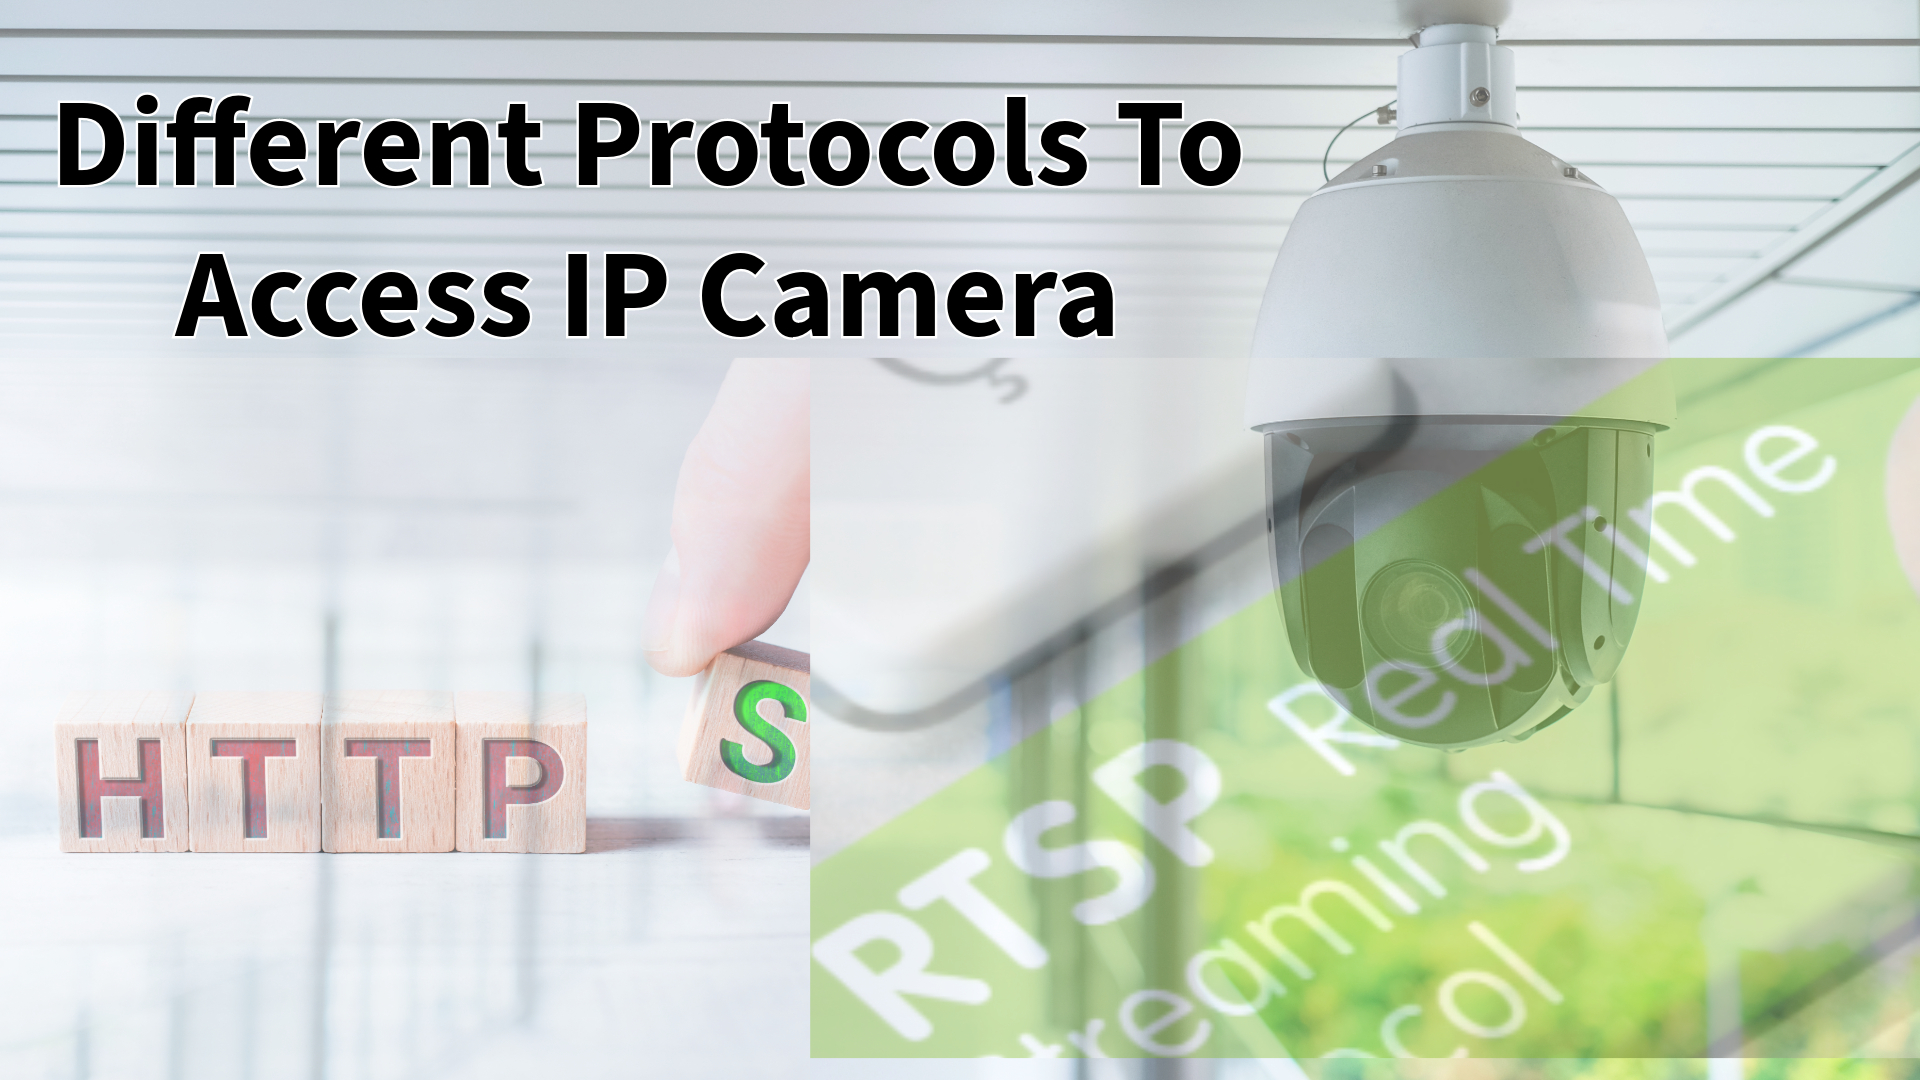 Access IP Camera